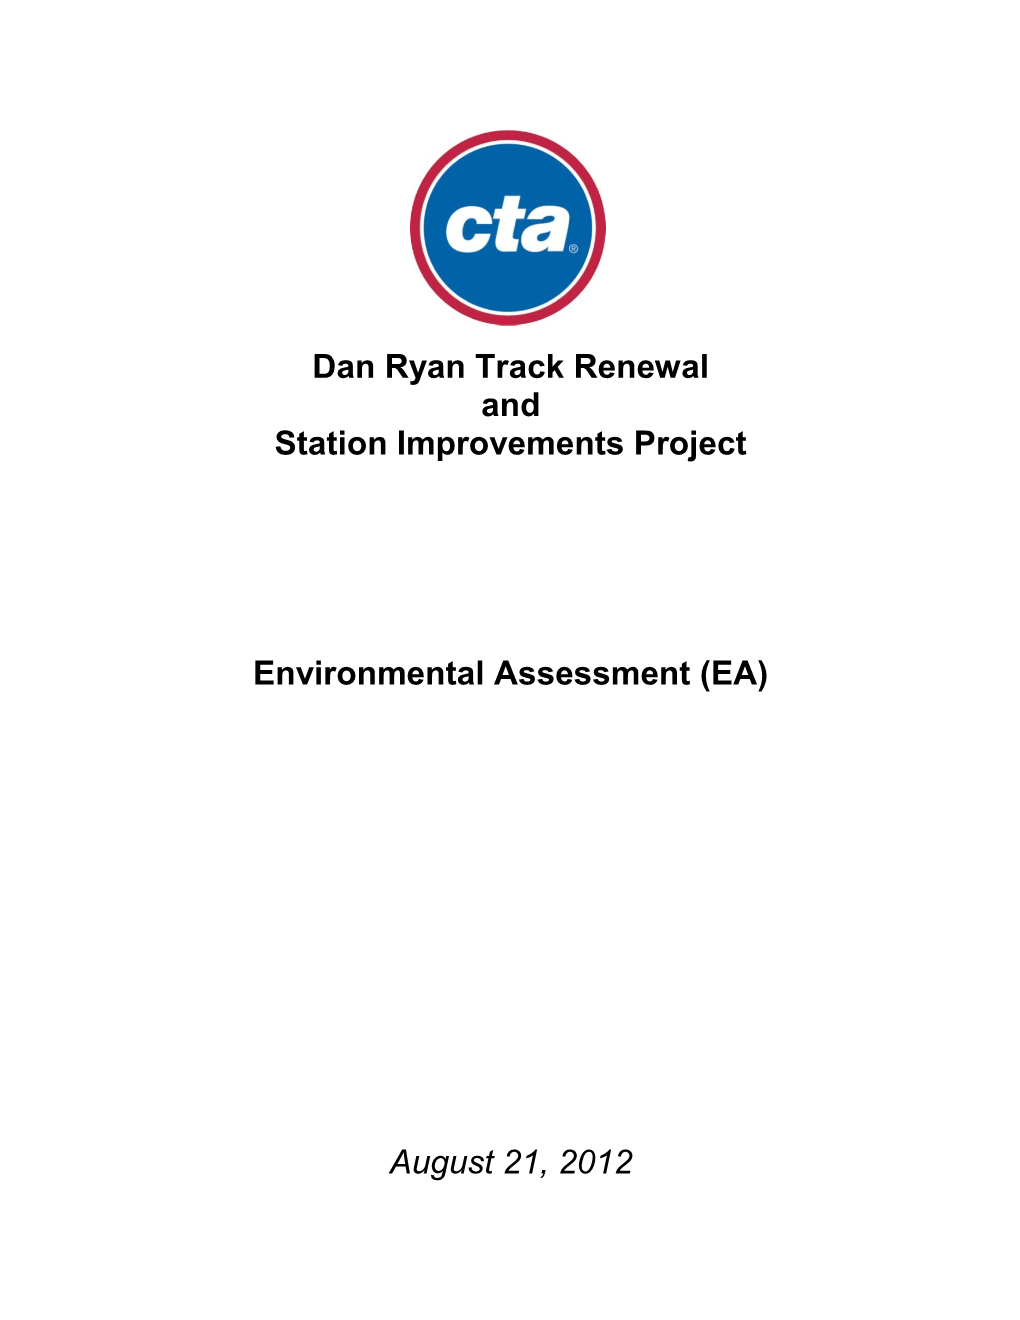 Dan Ryan Track Renewal and Station Improvements Project